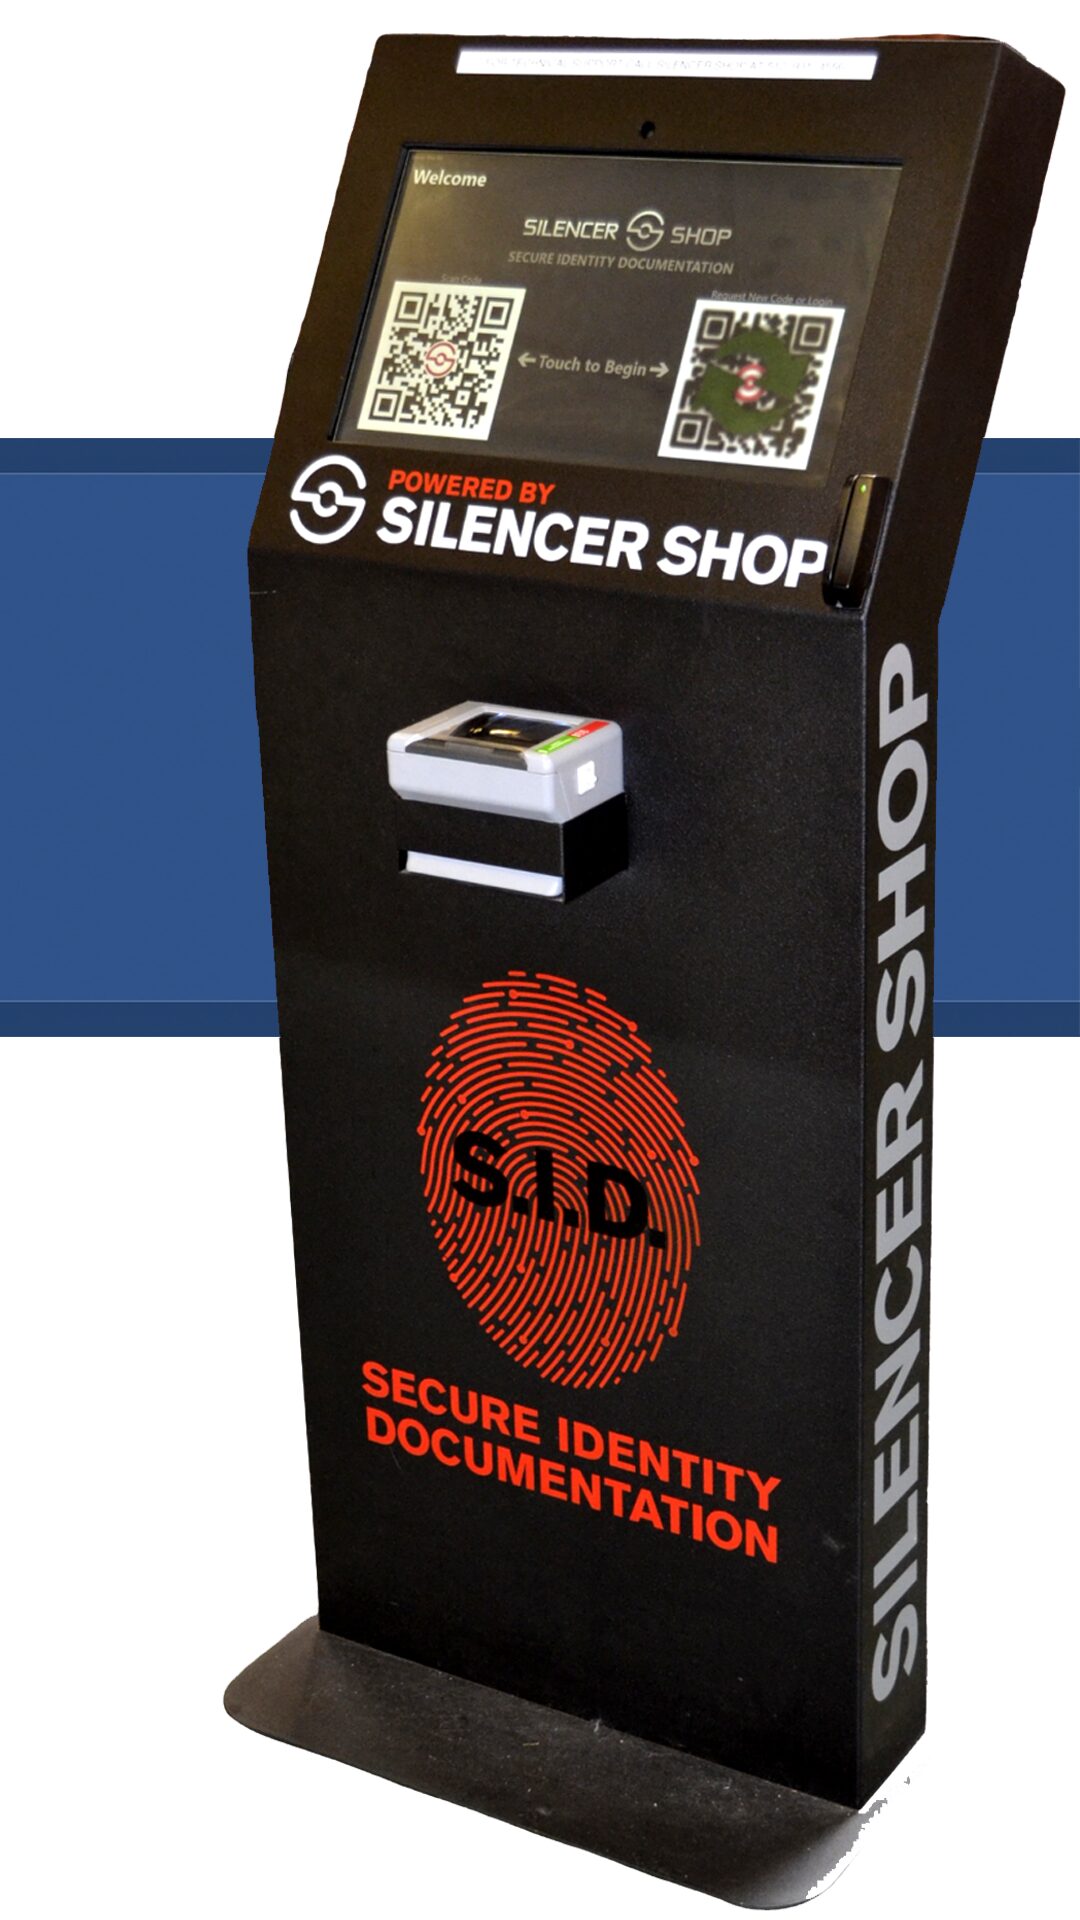 Silencer Shop Kiosk | Suppressors for Sale in Oklahoma City